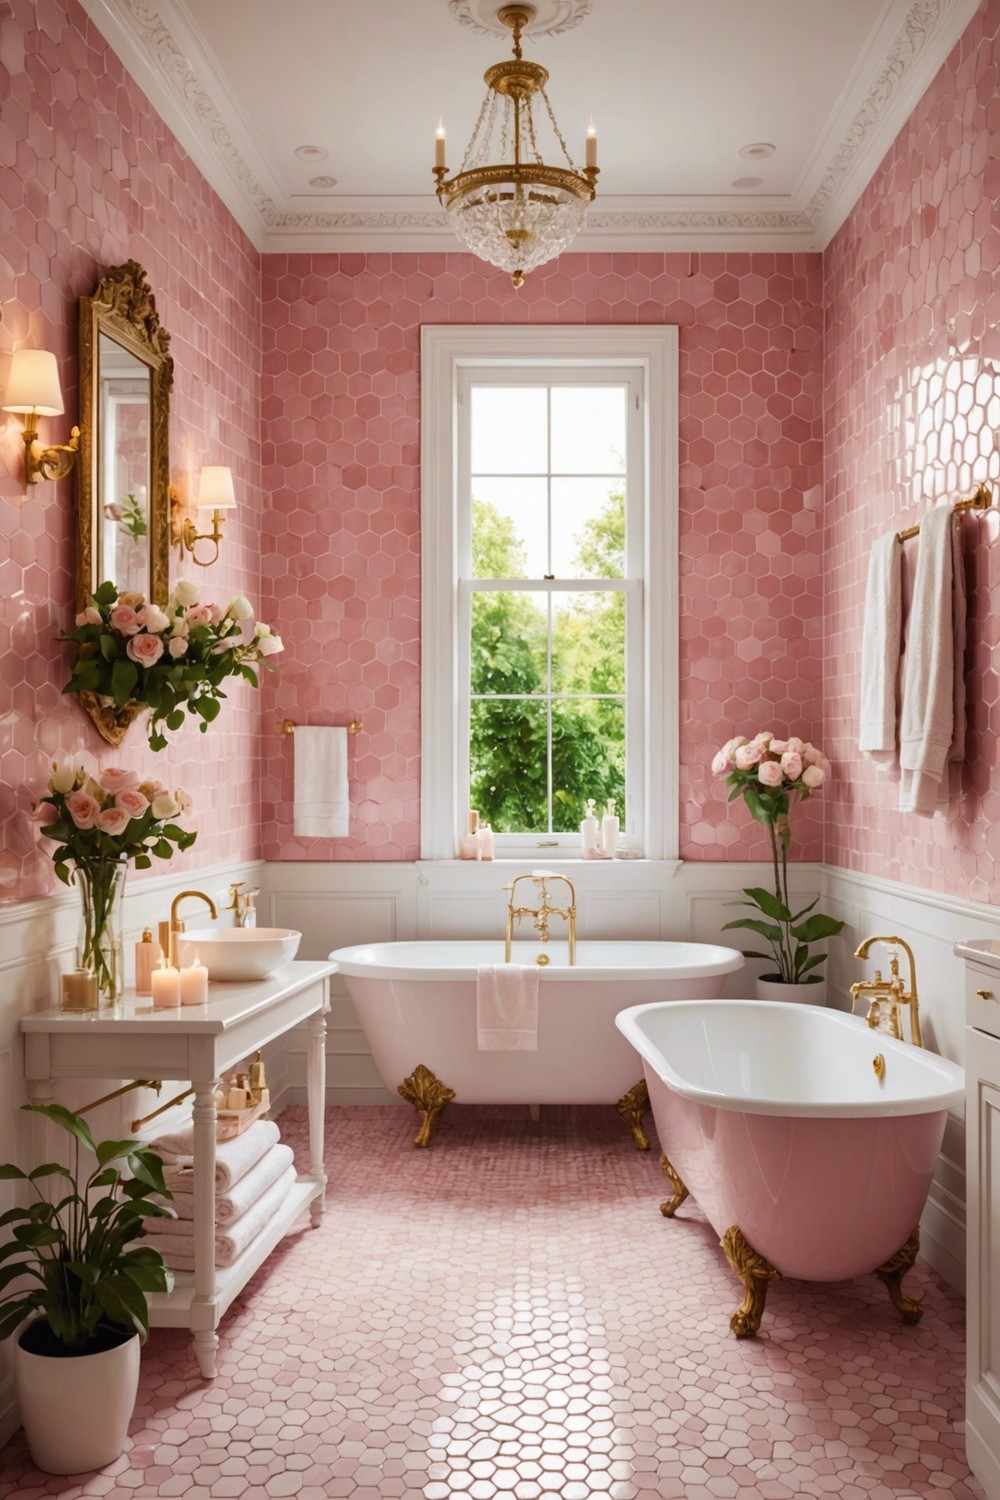 Blushing Bathroom: Pink and White Hexagonal Tiles